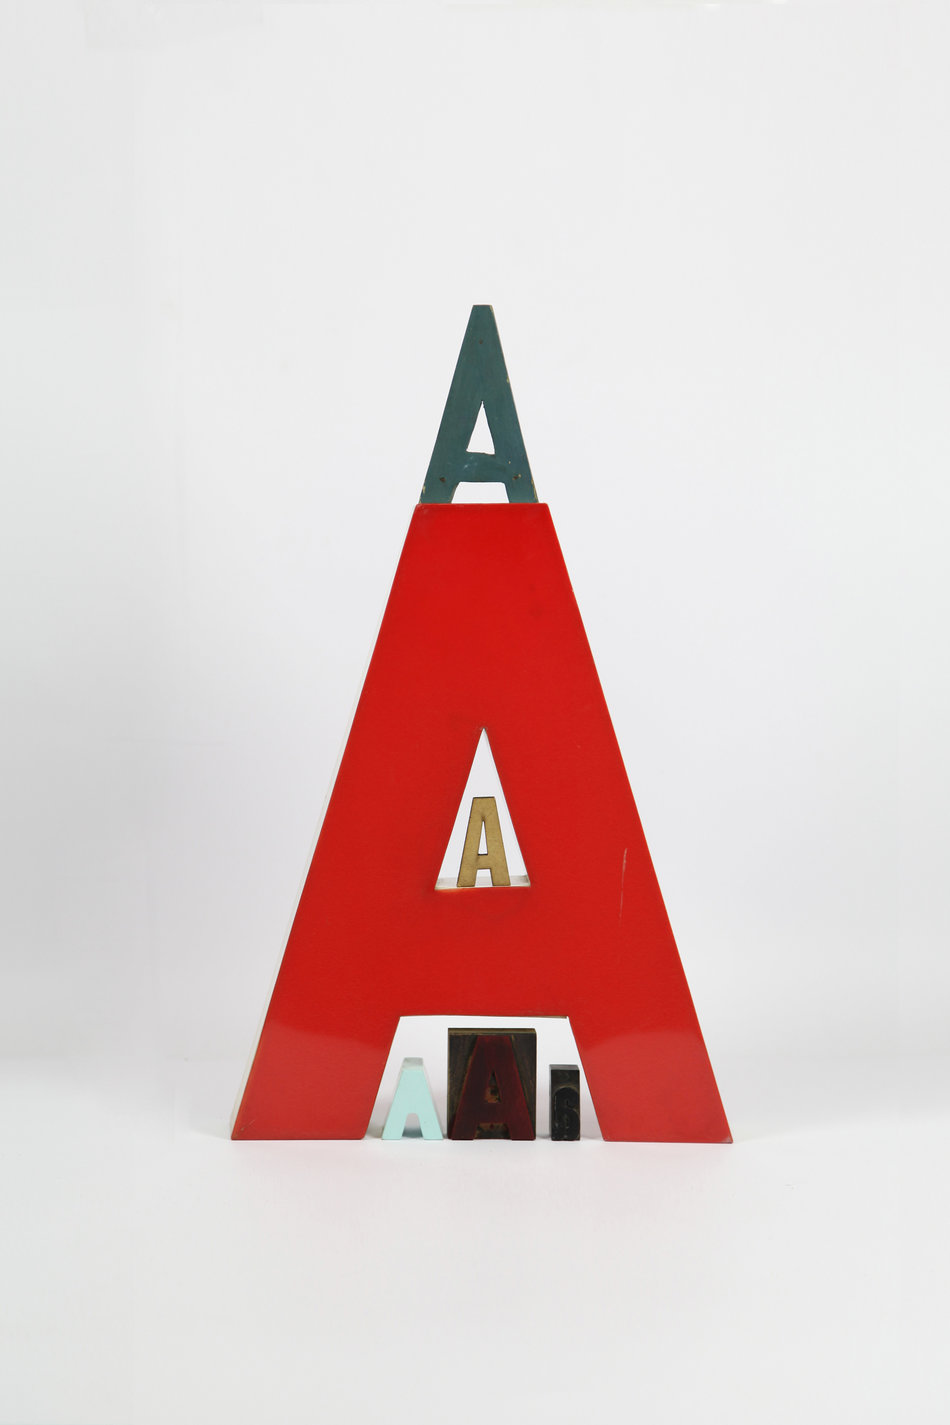 AAAAAA Photographies | Research | Antoni Arola Studio